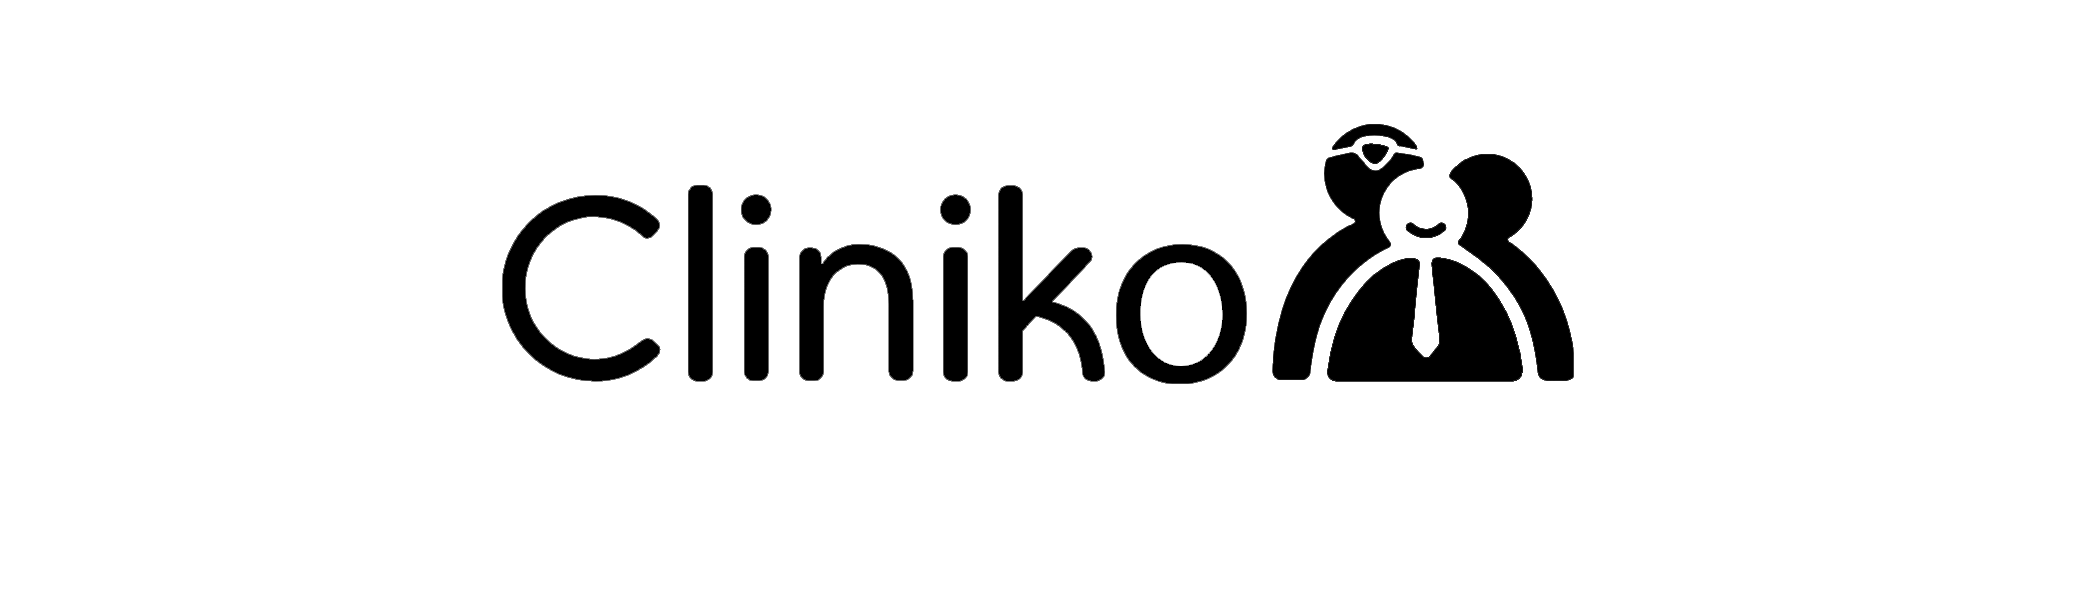 Cliniko Logo 2021.png